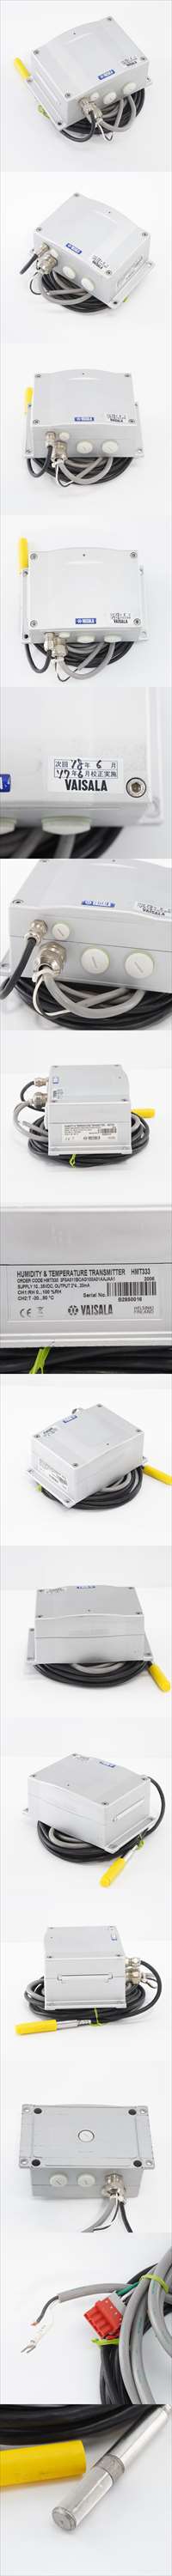 人気店舗[DW]USED 8日保証 06/2017CAL VAISALA HMT333 湿度温度変換器 HUMIDITY & TEMPERATURE TRANSMITTER[ST03372-0012] 環境測定器